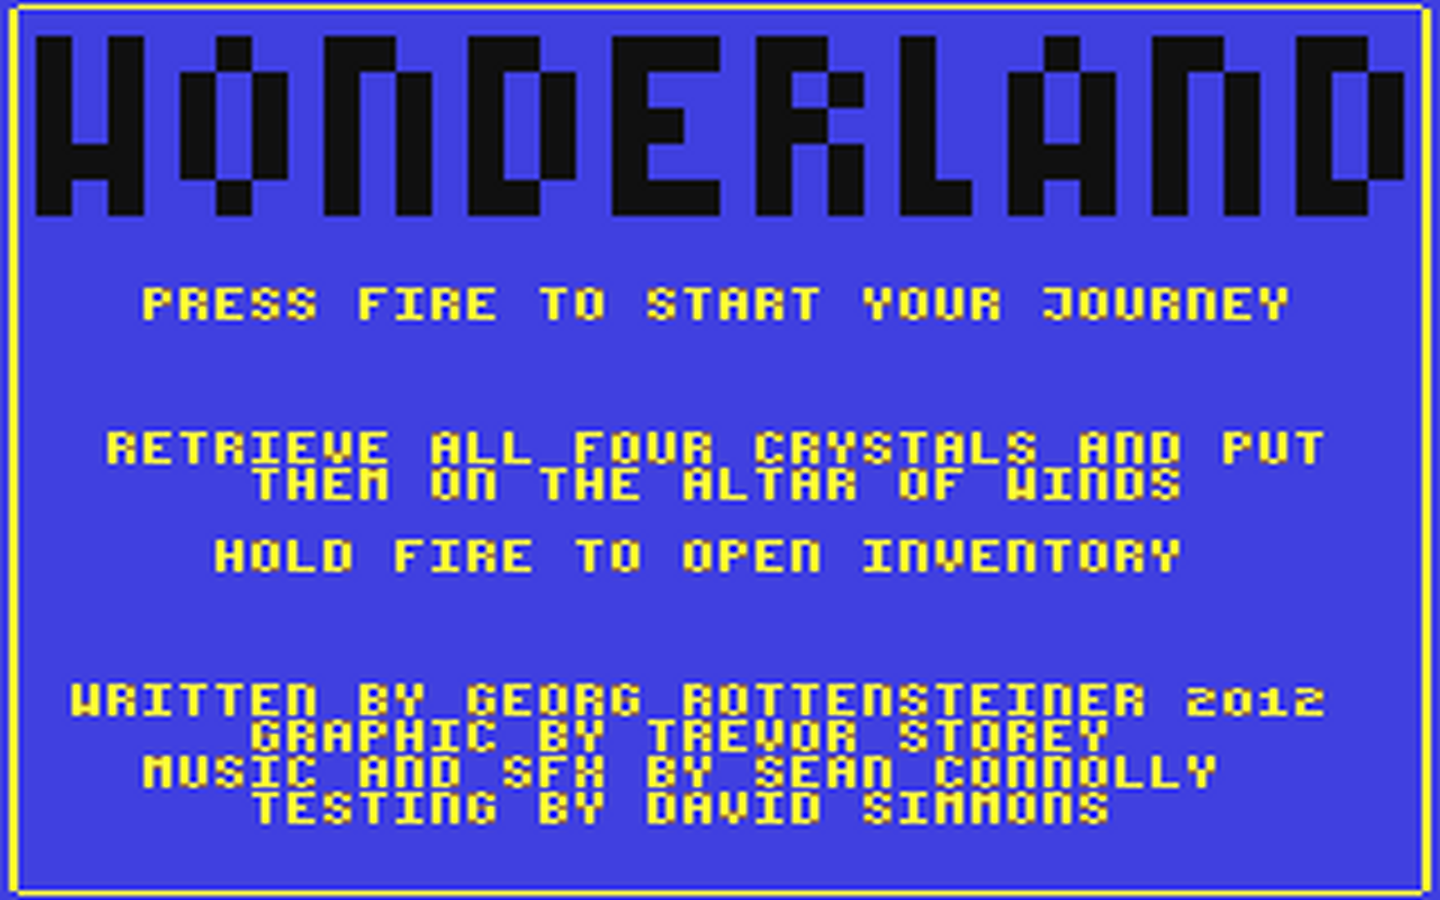 C64 GameBase Wonderland (Public_Domain) 2012